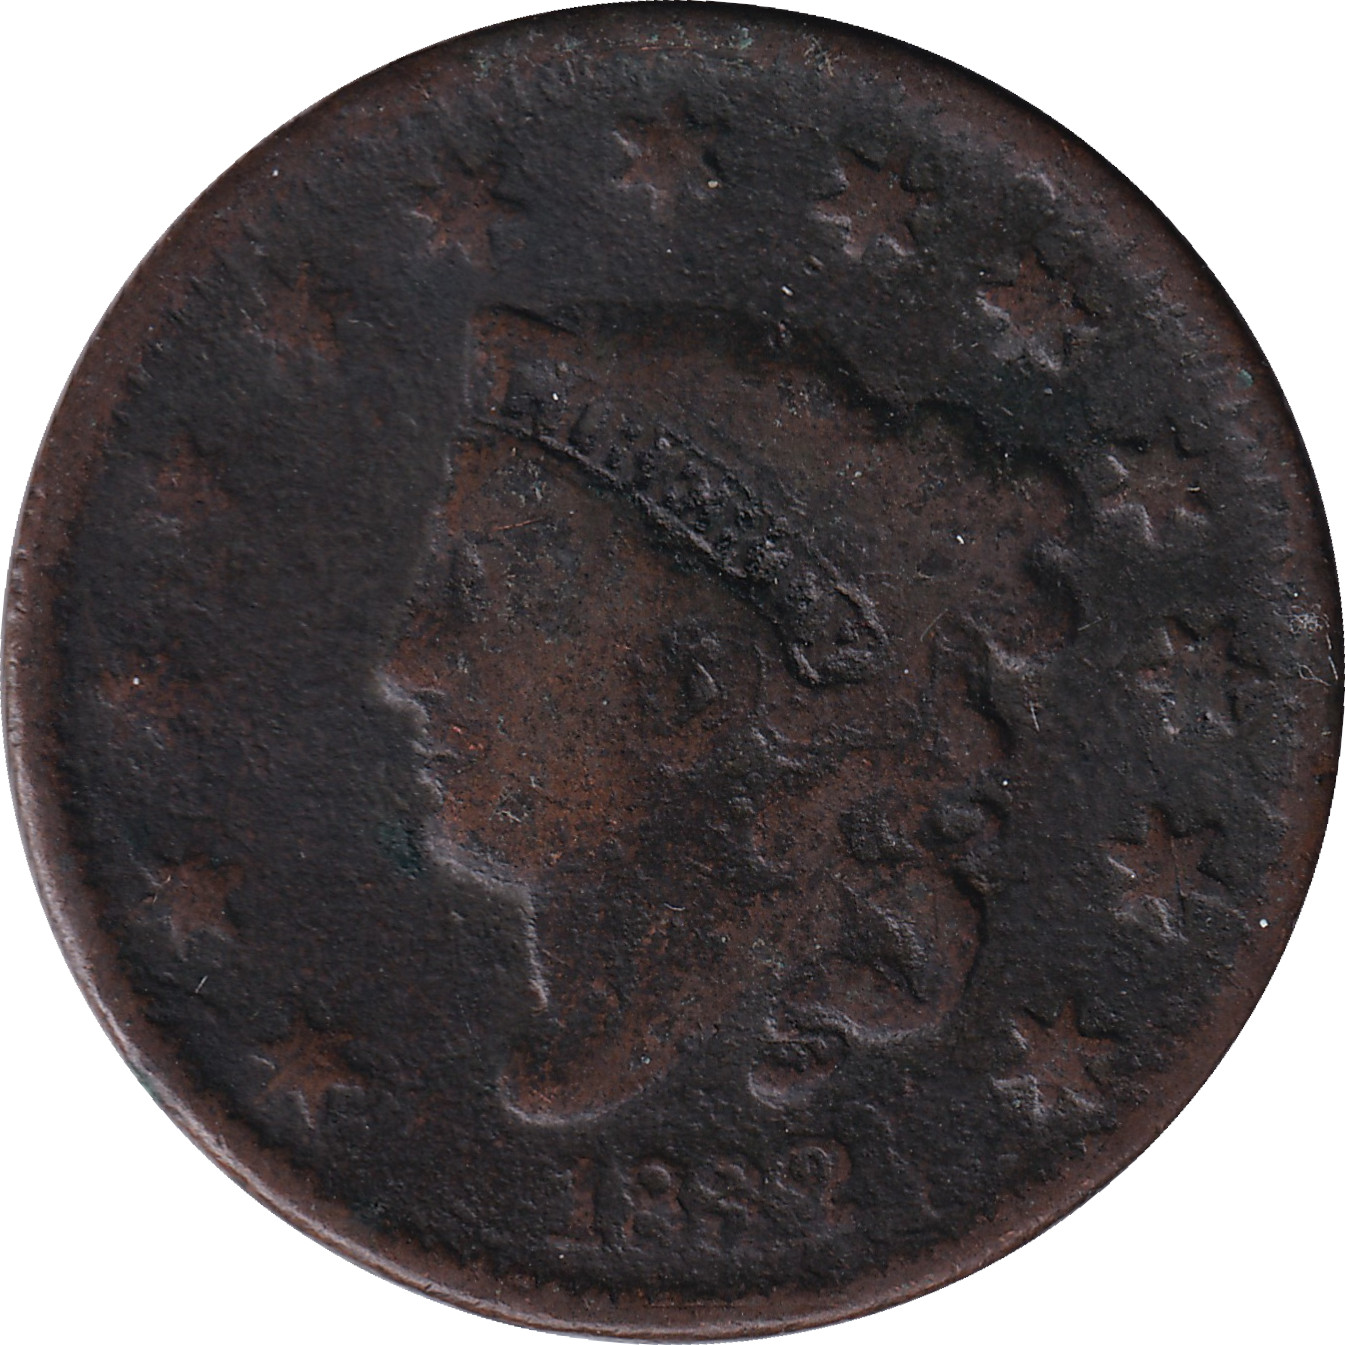 1 cent - Matron Head - Old head